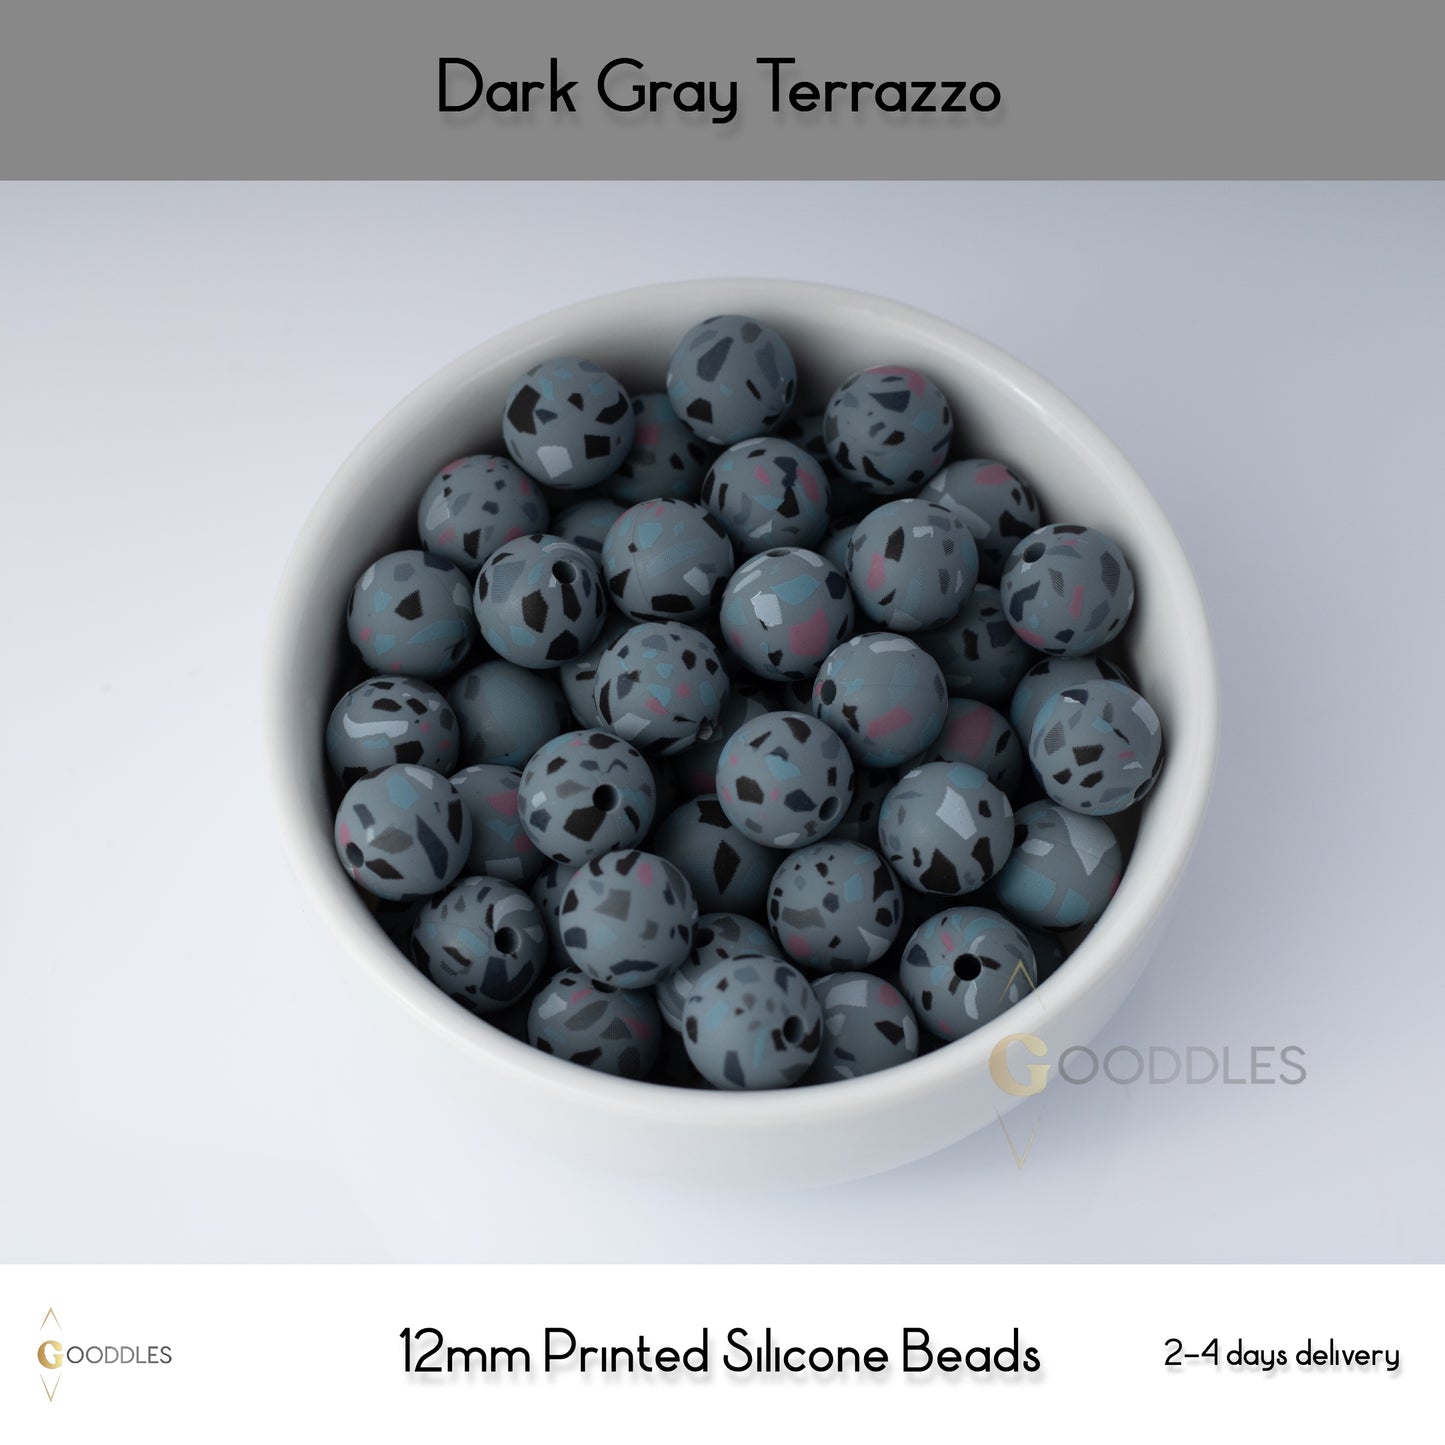 5pcs, Dark Gray Terrazzo Silicone Beads Printed Round Silicone Beads